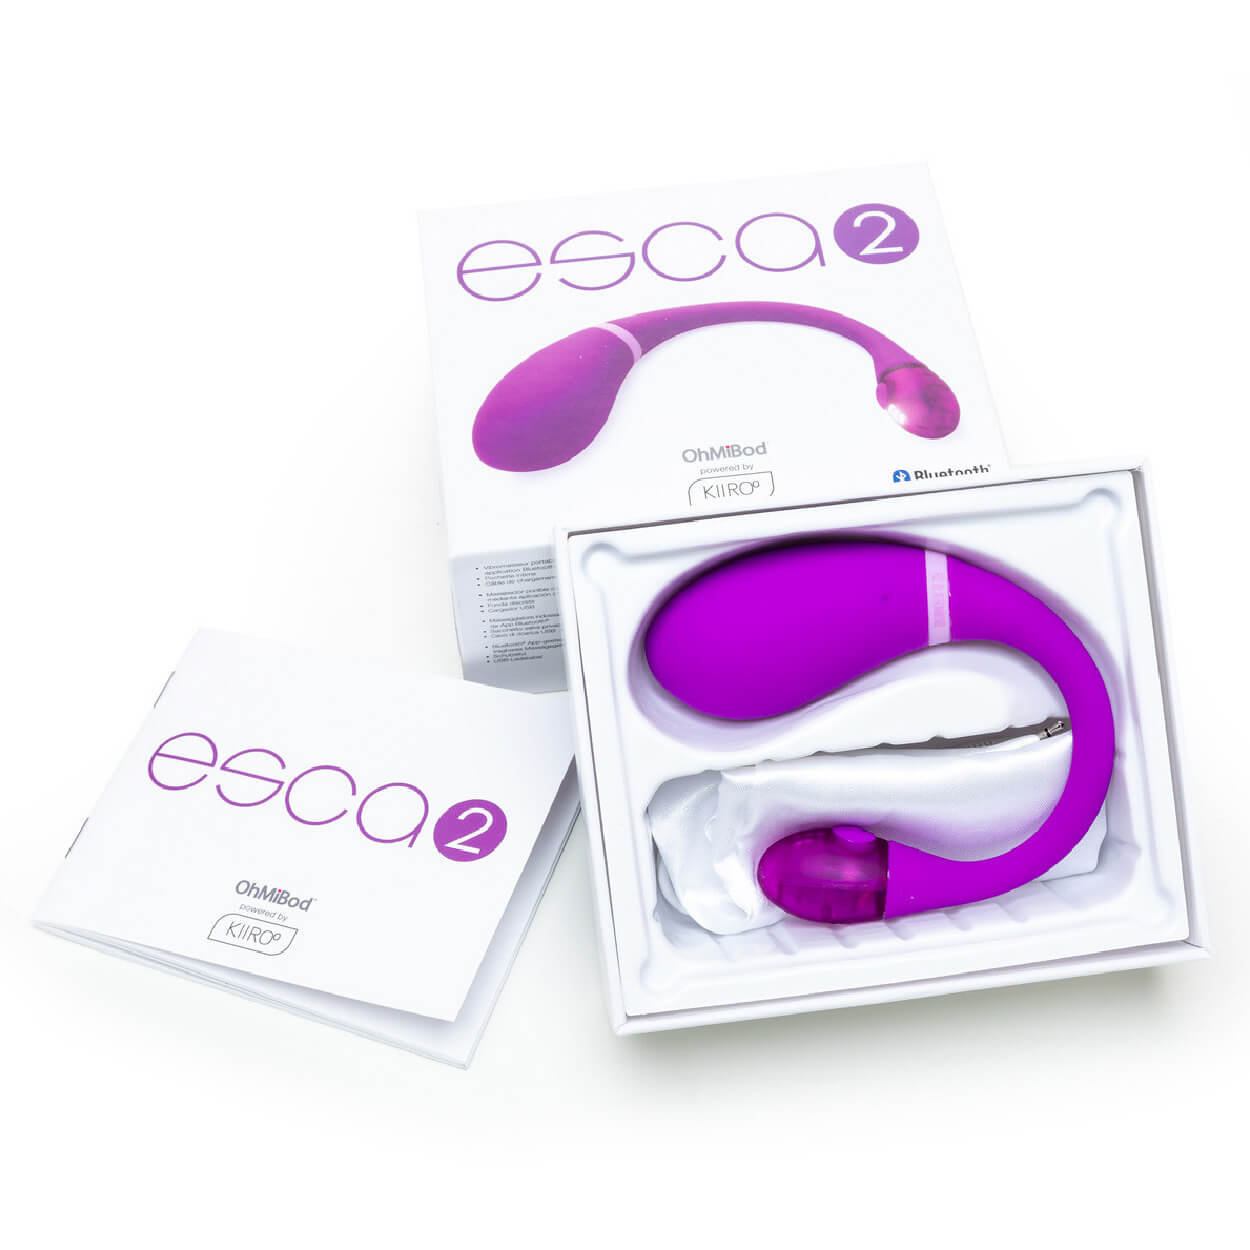 The versatile wearable vibrator Esca 2 by OhMiBod - Product image